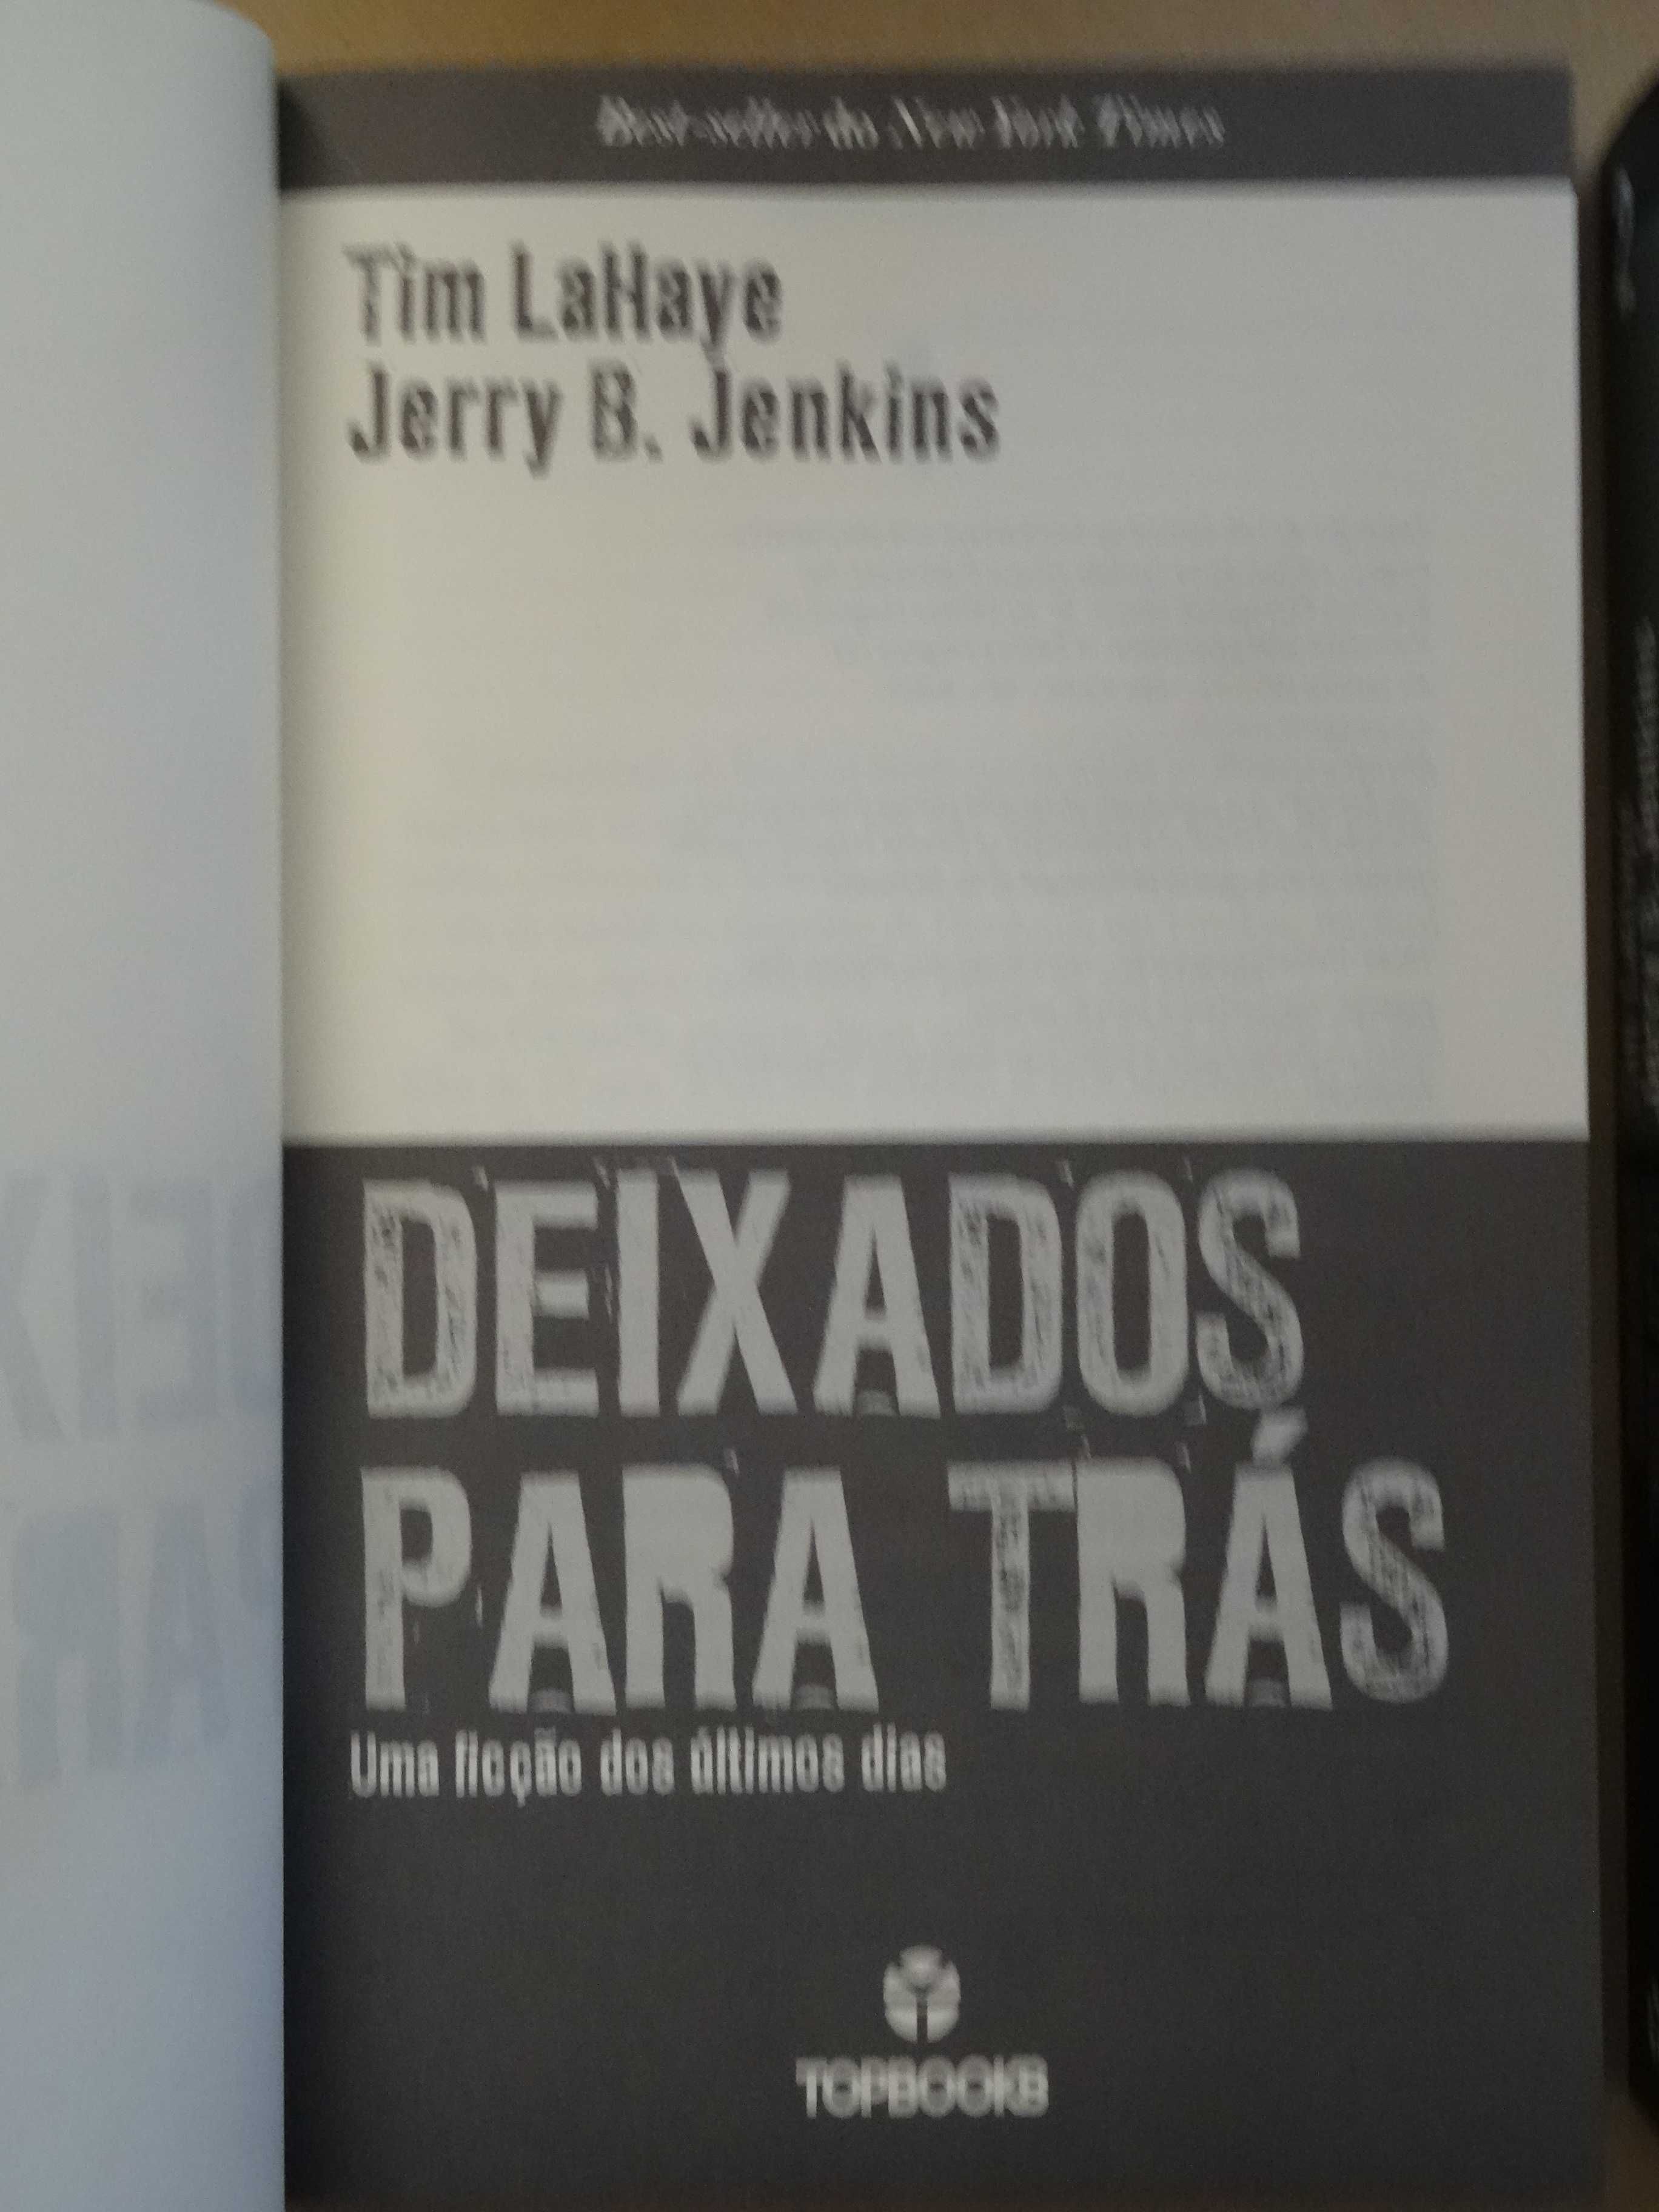 Tim LaHaye e Jerry B. Jenkins - 2 Volumes